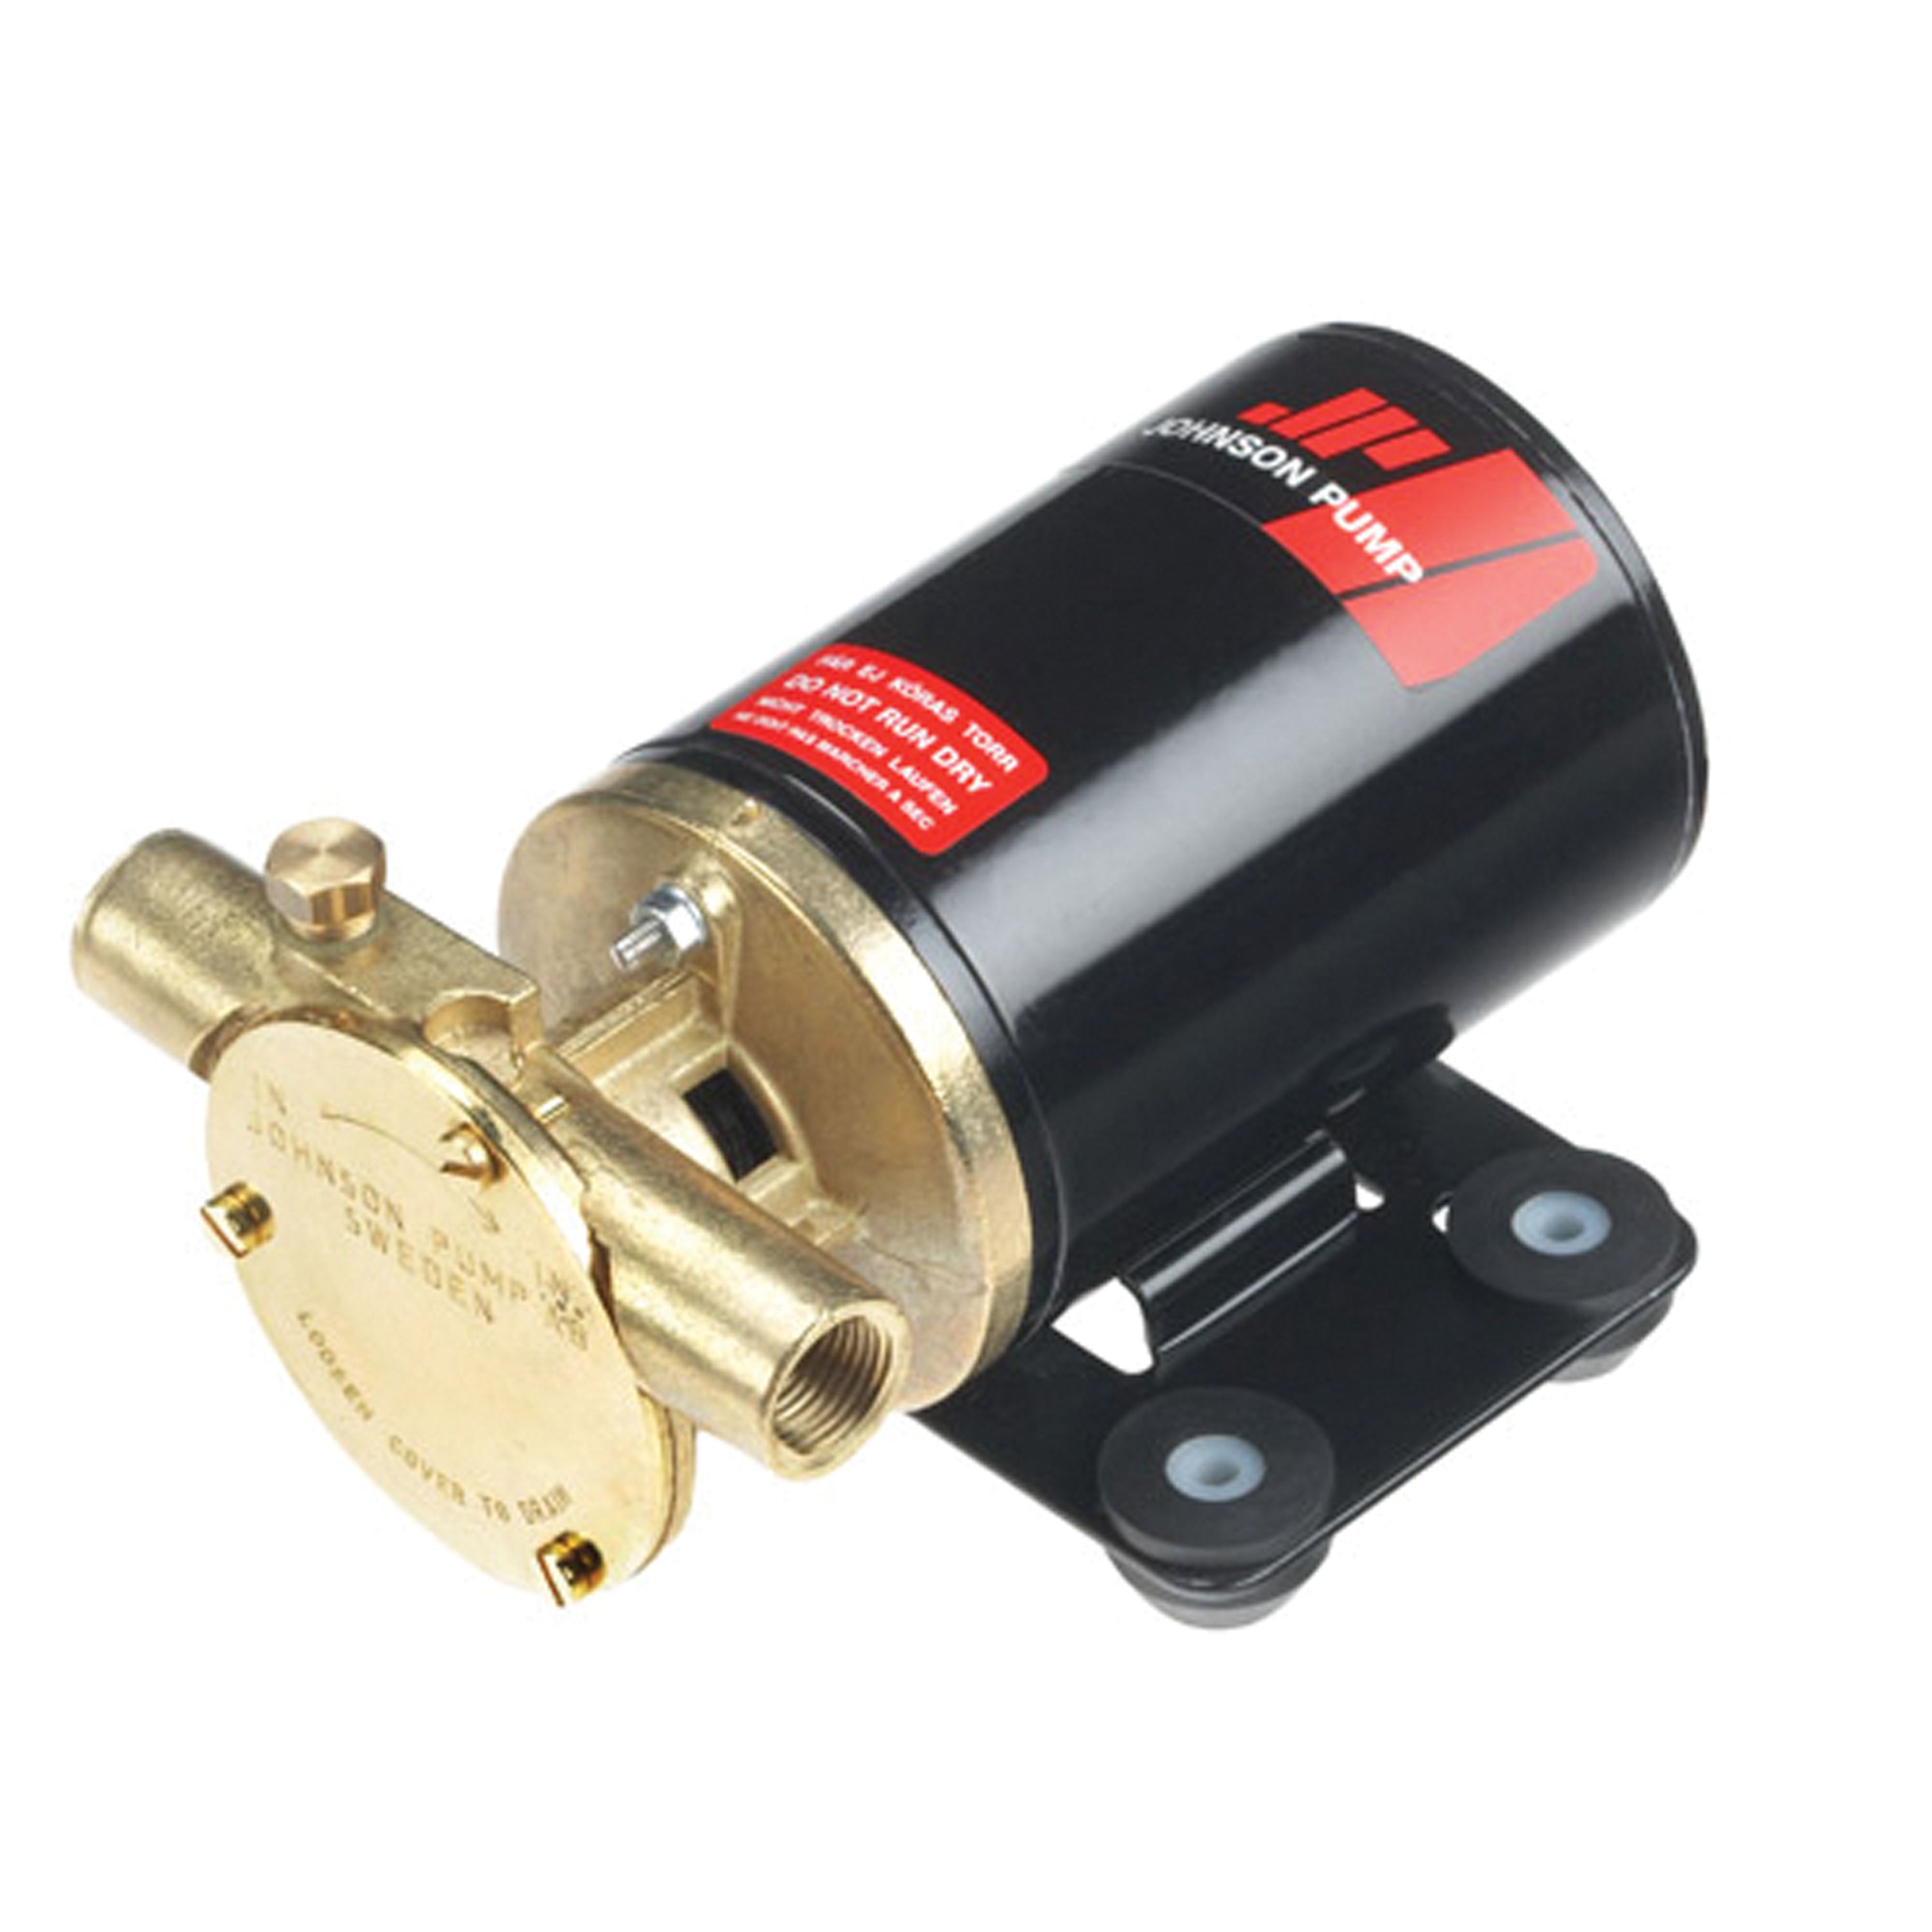 Johnson Pump 10-24516-03 4.0 GPM Multi-Purpose Utility Pump 3/8" NPT, 12V